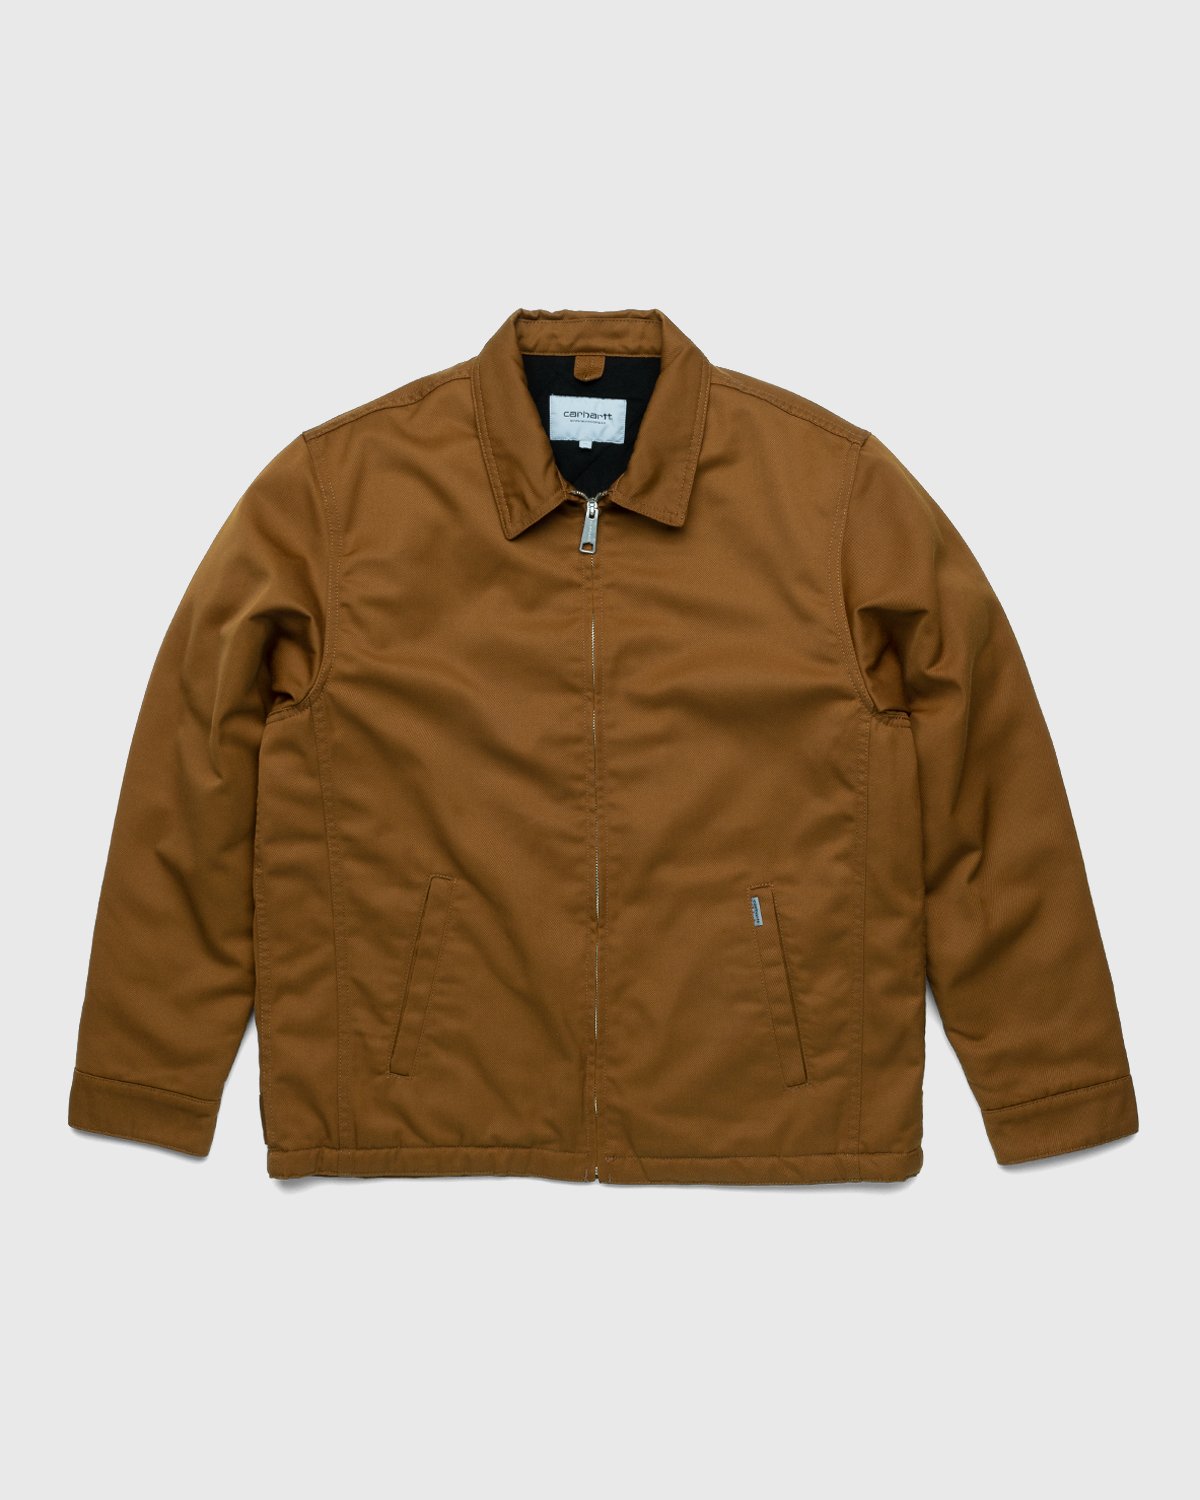 Carhartt WIP - Modular Jacket Tawny Rinsed - Clothing - Brown - Image 1